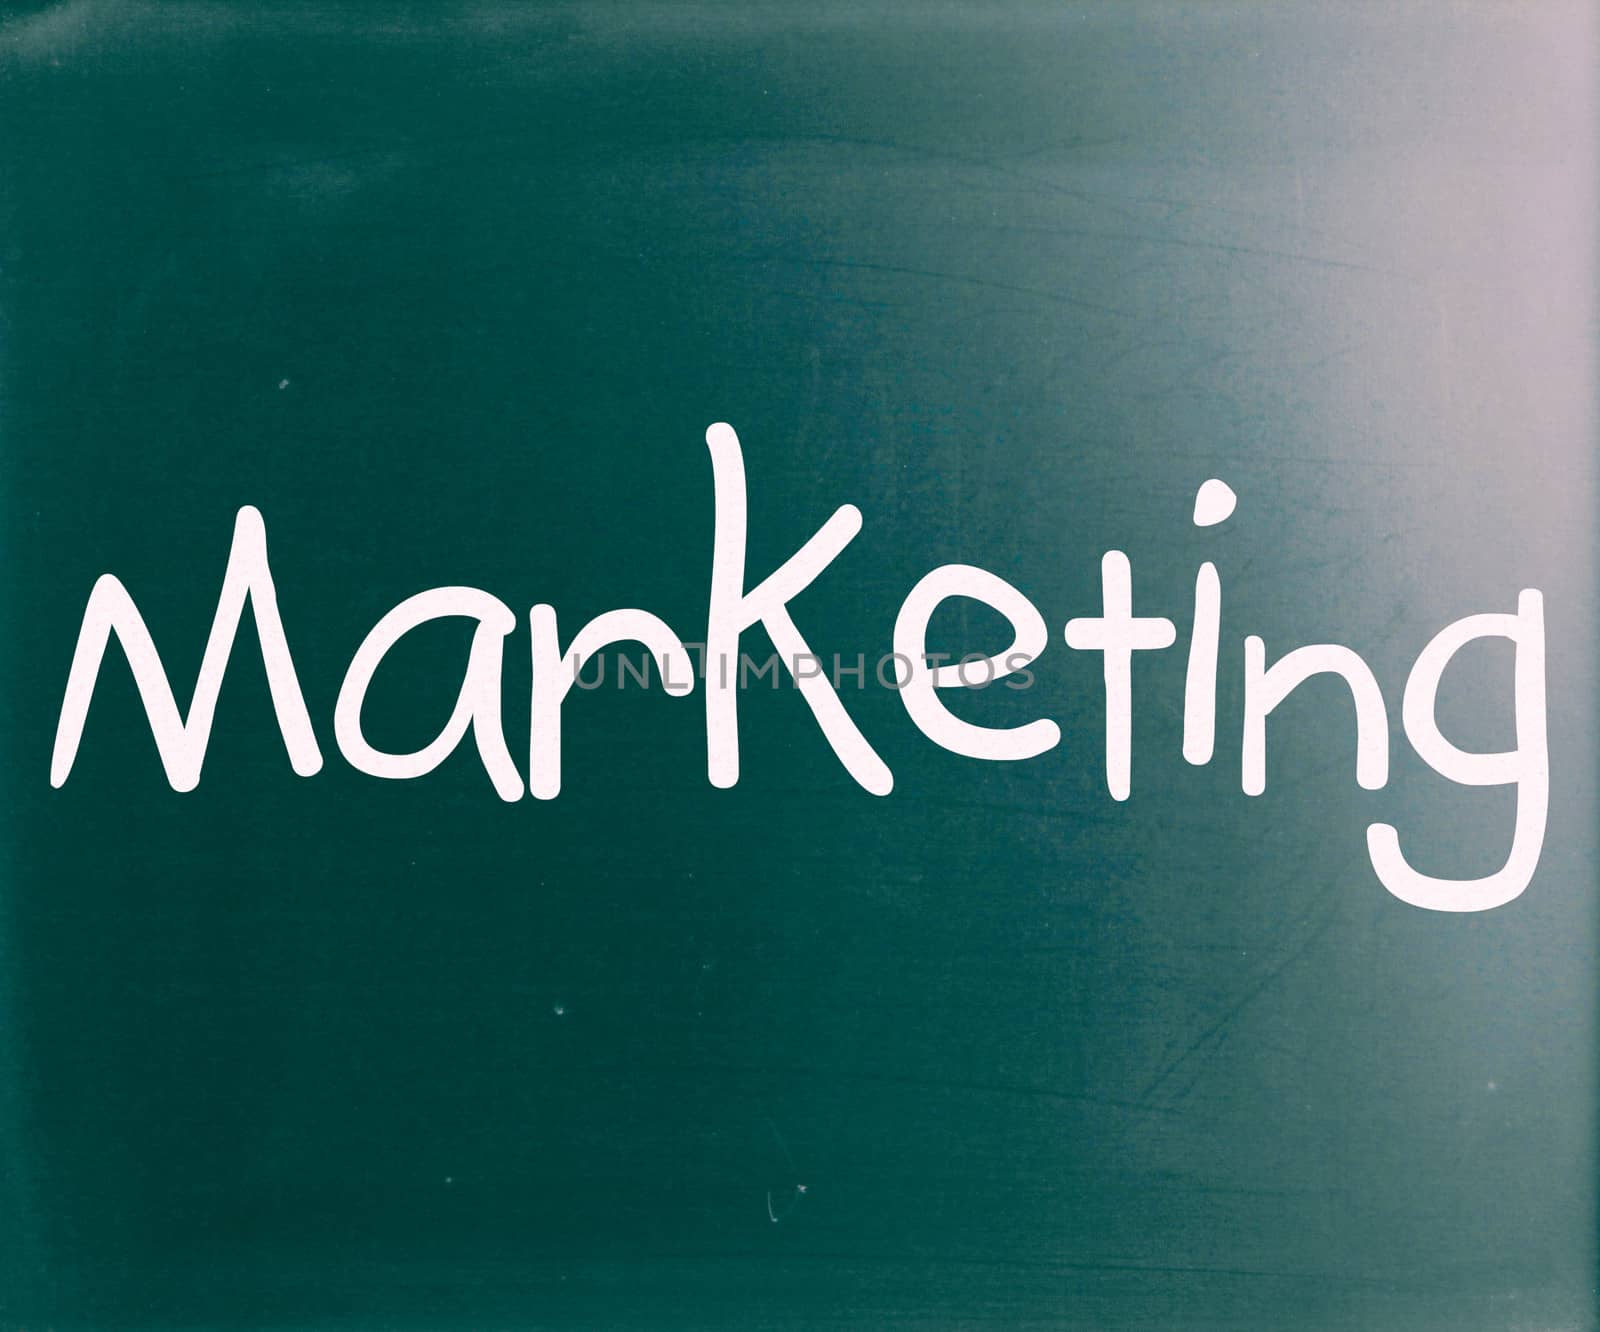 The word "Marketing" handwritten with white chalk on a blackboard